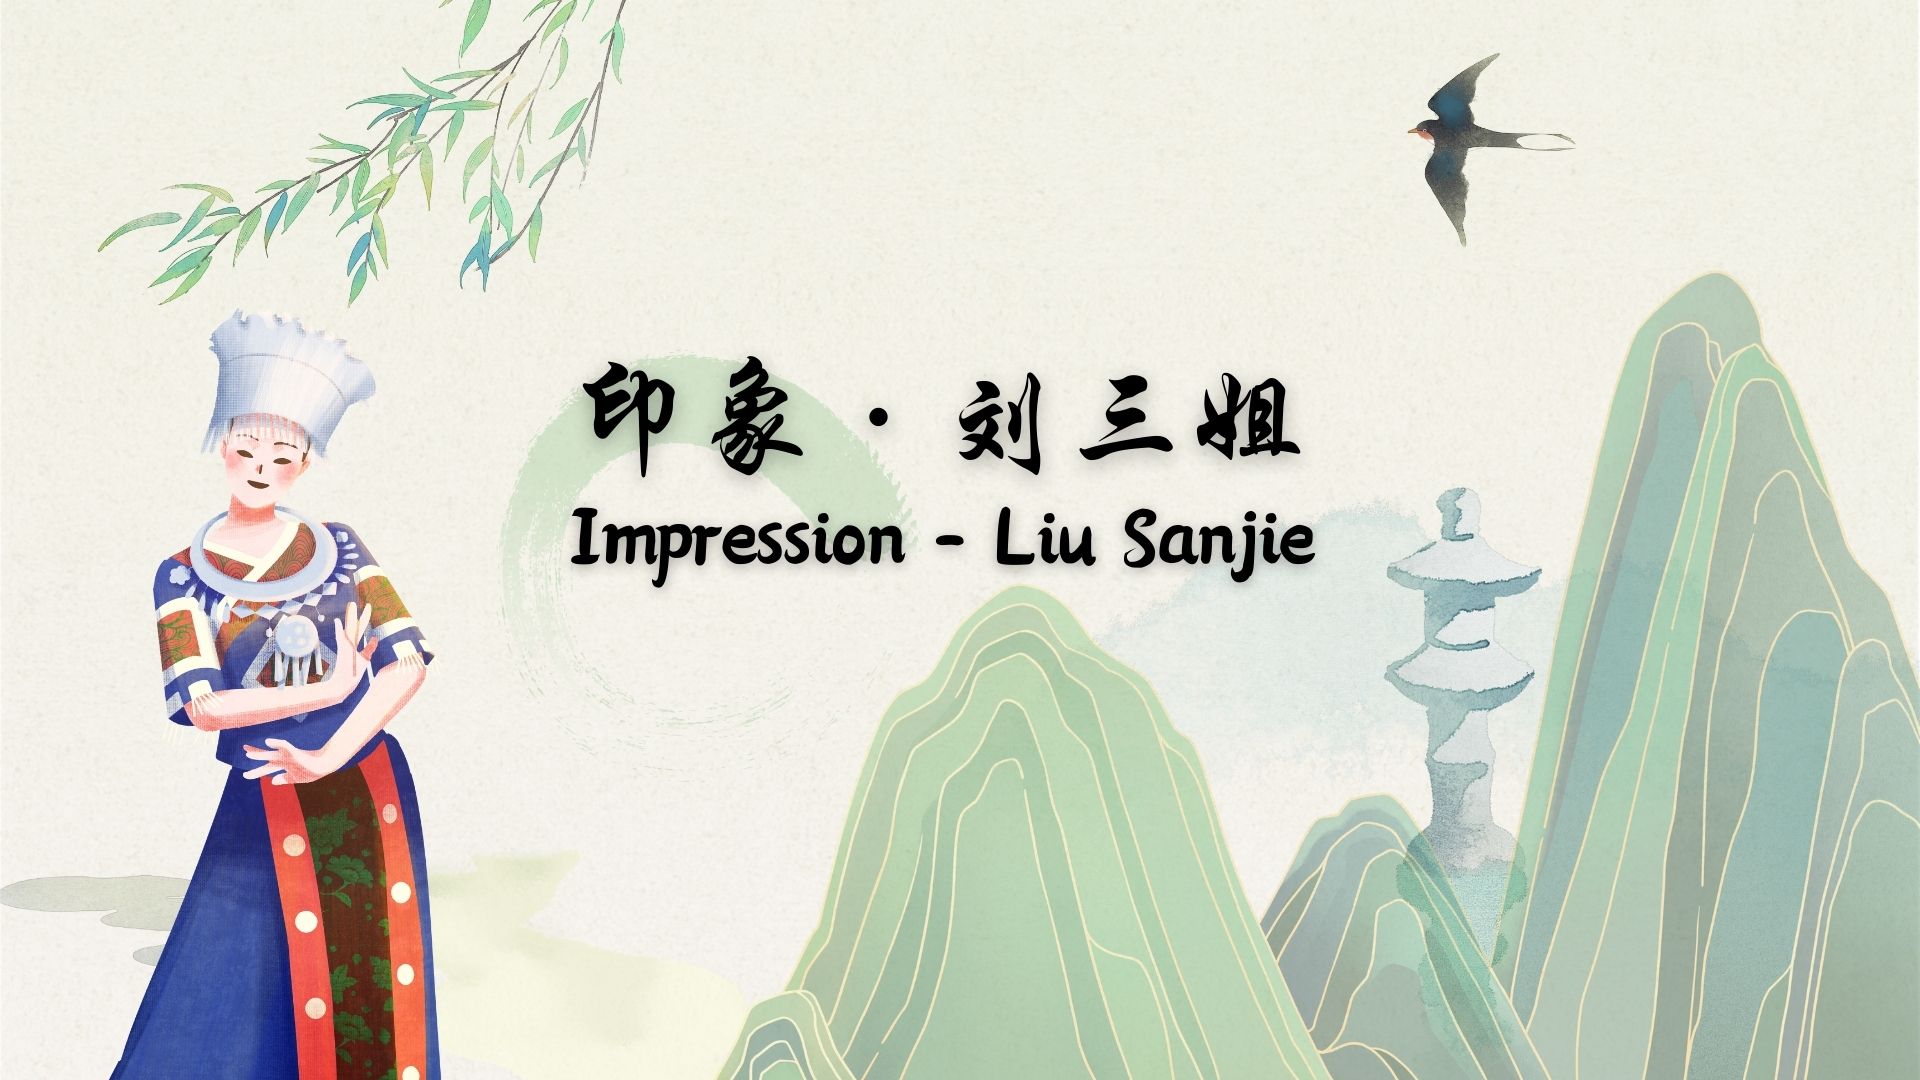 Impression - Liu Sanjie